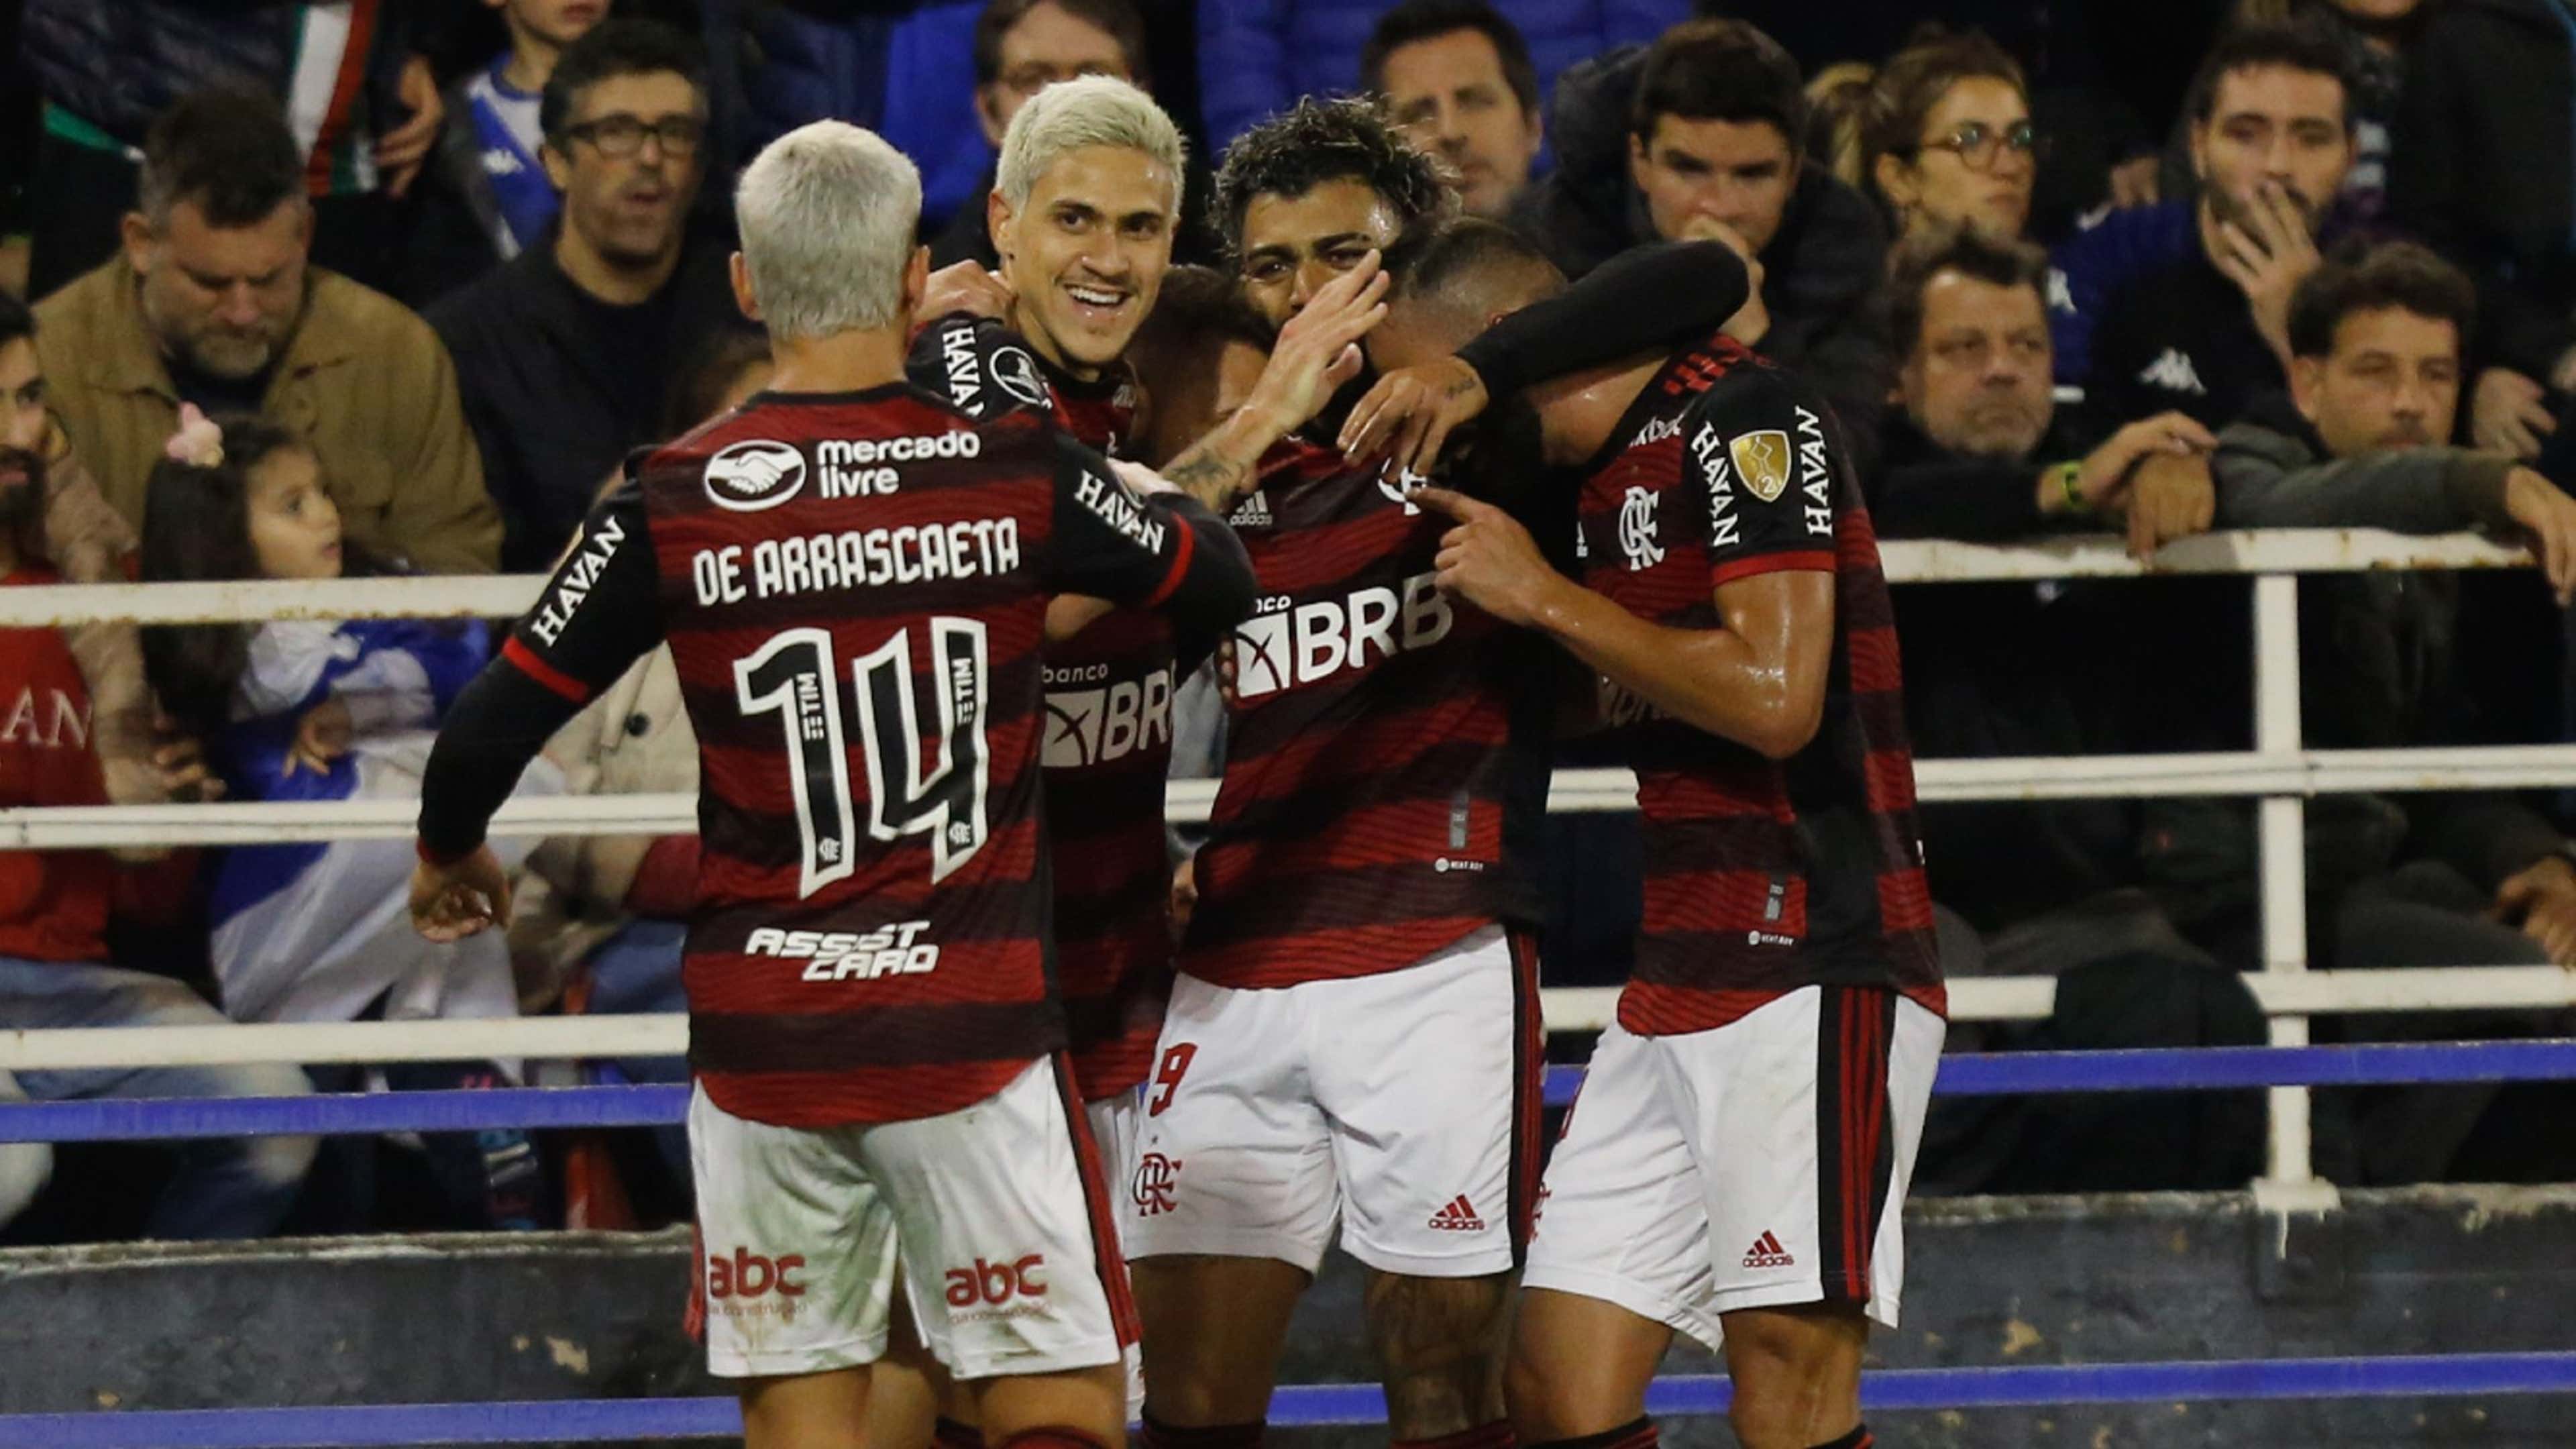 Tombense FC: A Rising Football Club in Brazil